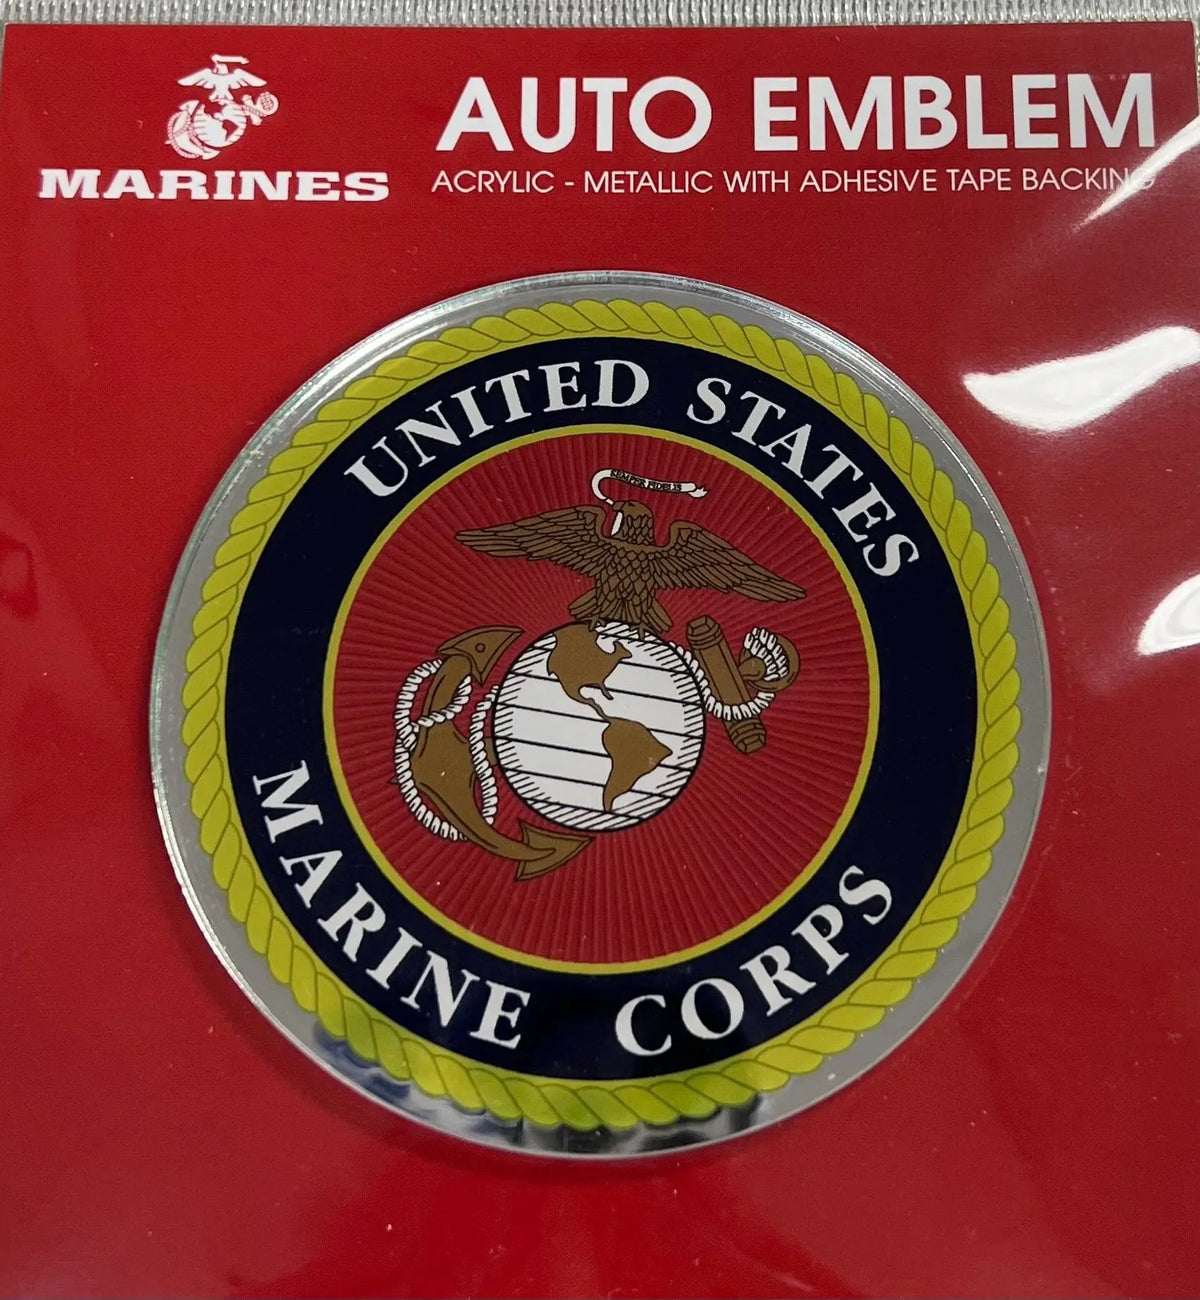 U.S. MARINES COLOR ACRYLIC AUTO EMBLEM- Made in USA